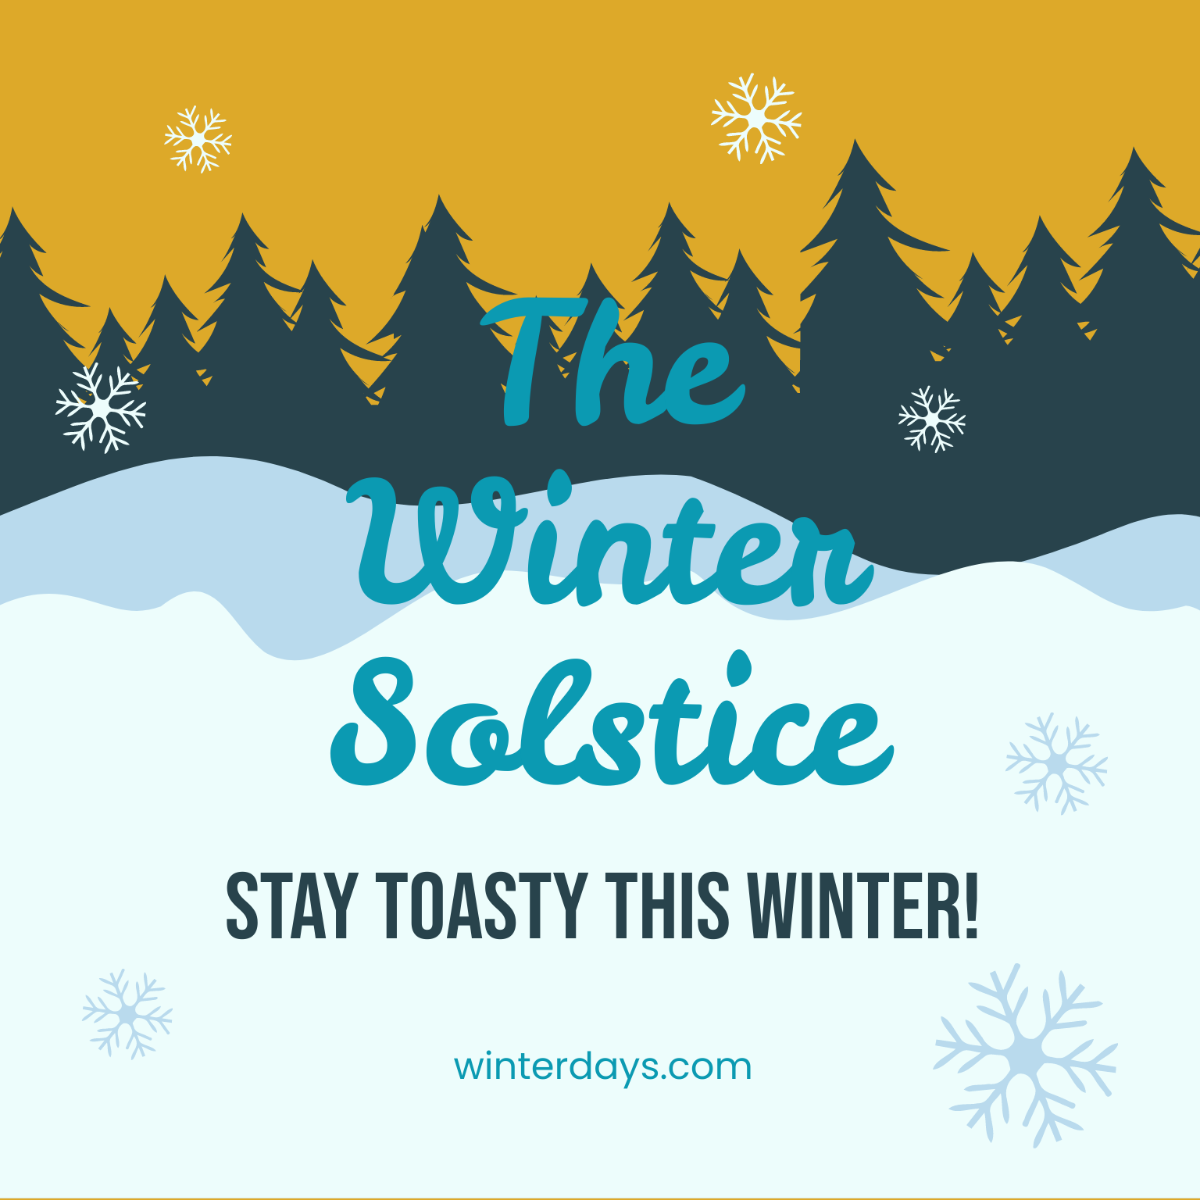 Winter Solstice Poster Vector Template